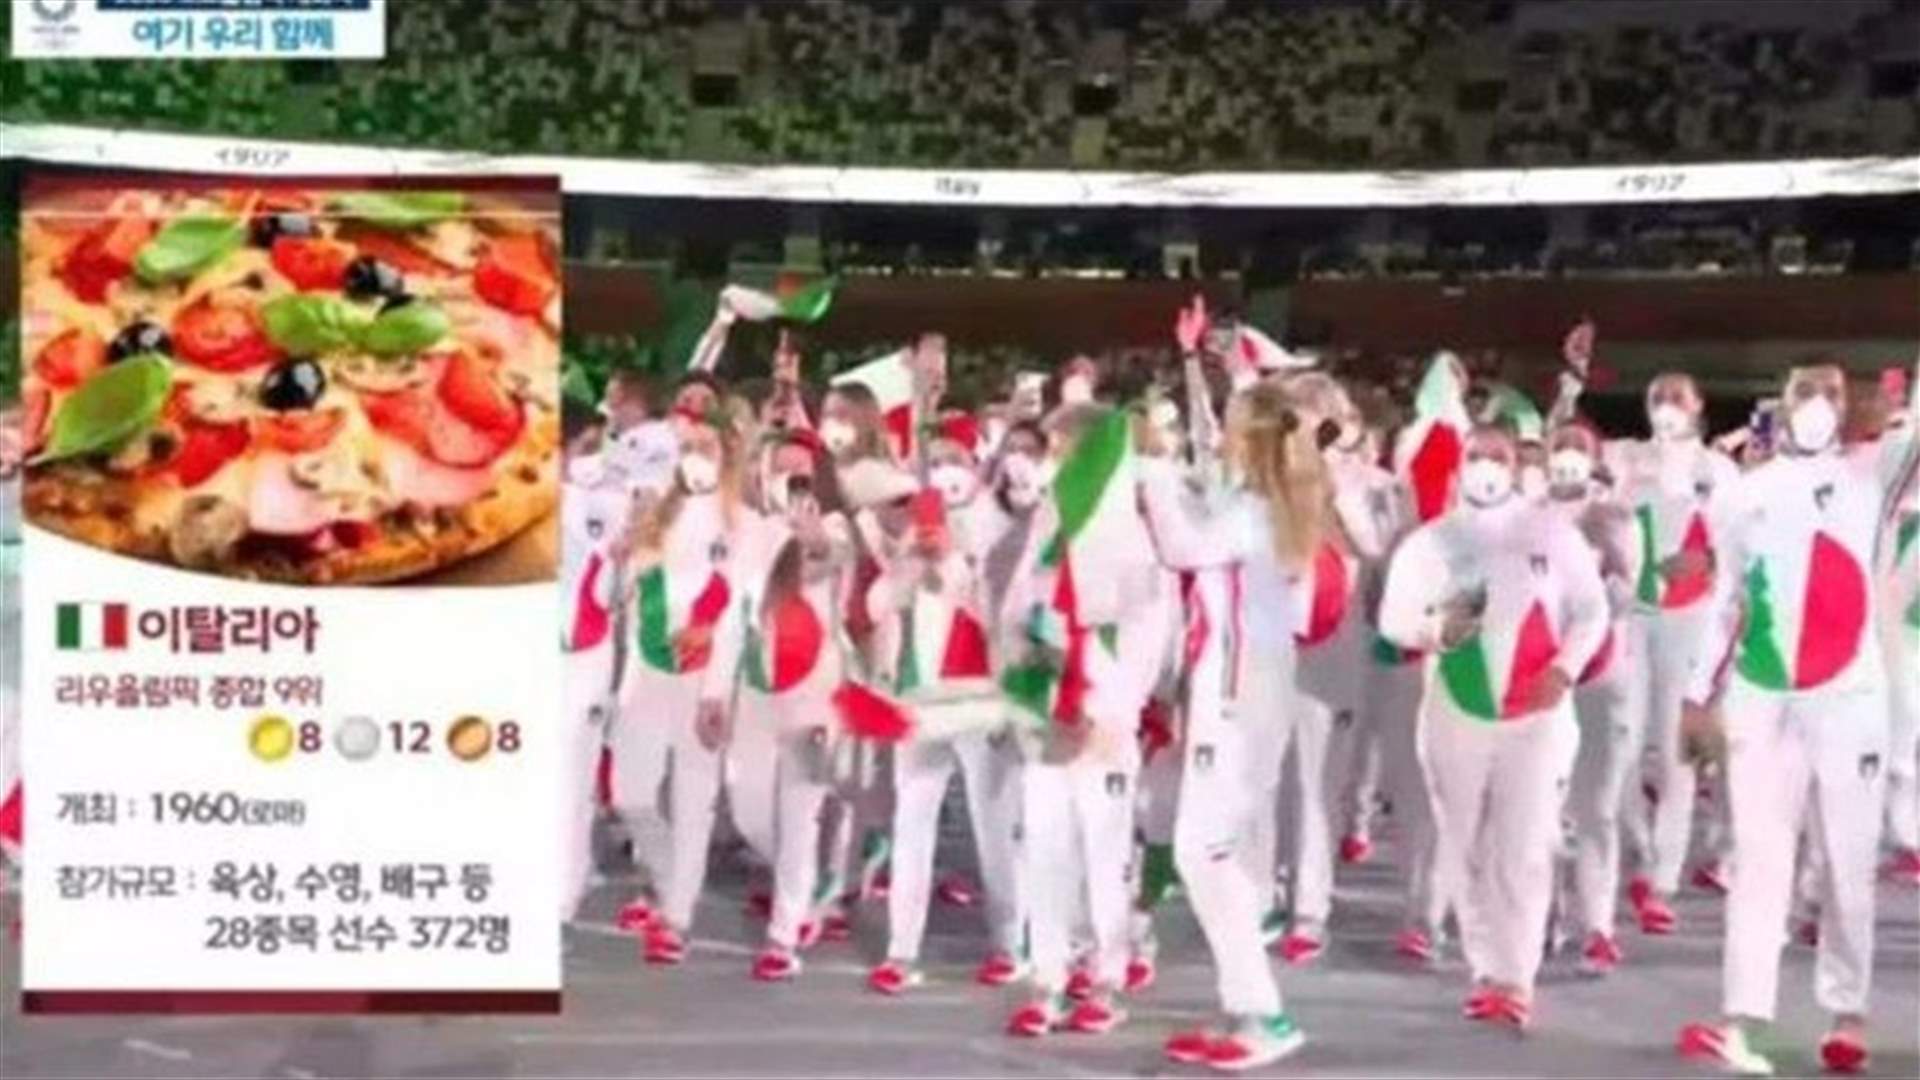 &quot;بيتزا لإيطاليا ودراكولا لرومانيا&quot; ... هكذا عرّفت قناة كورية عن الرياضيين في أولمبياد طوكيو 2020